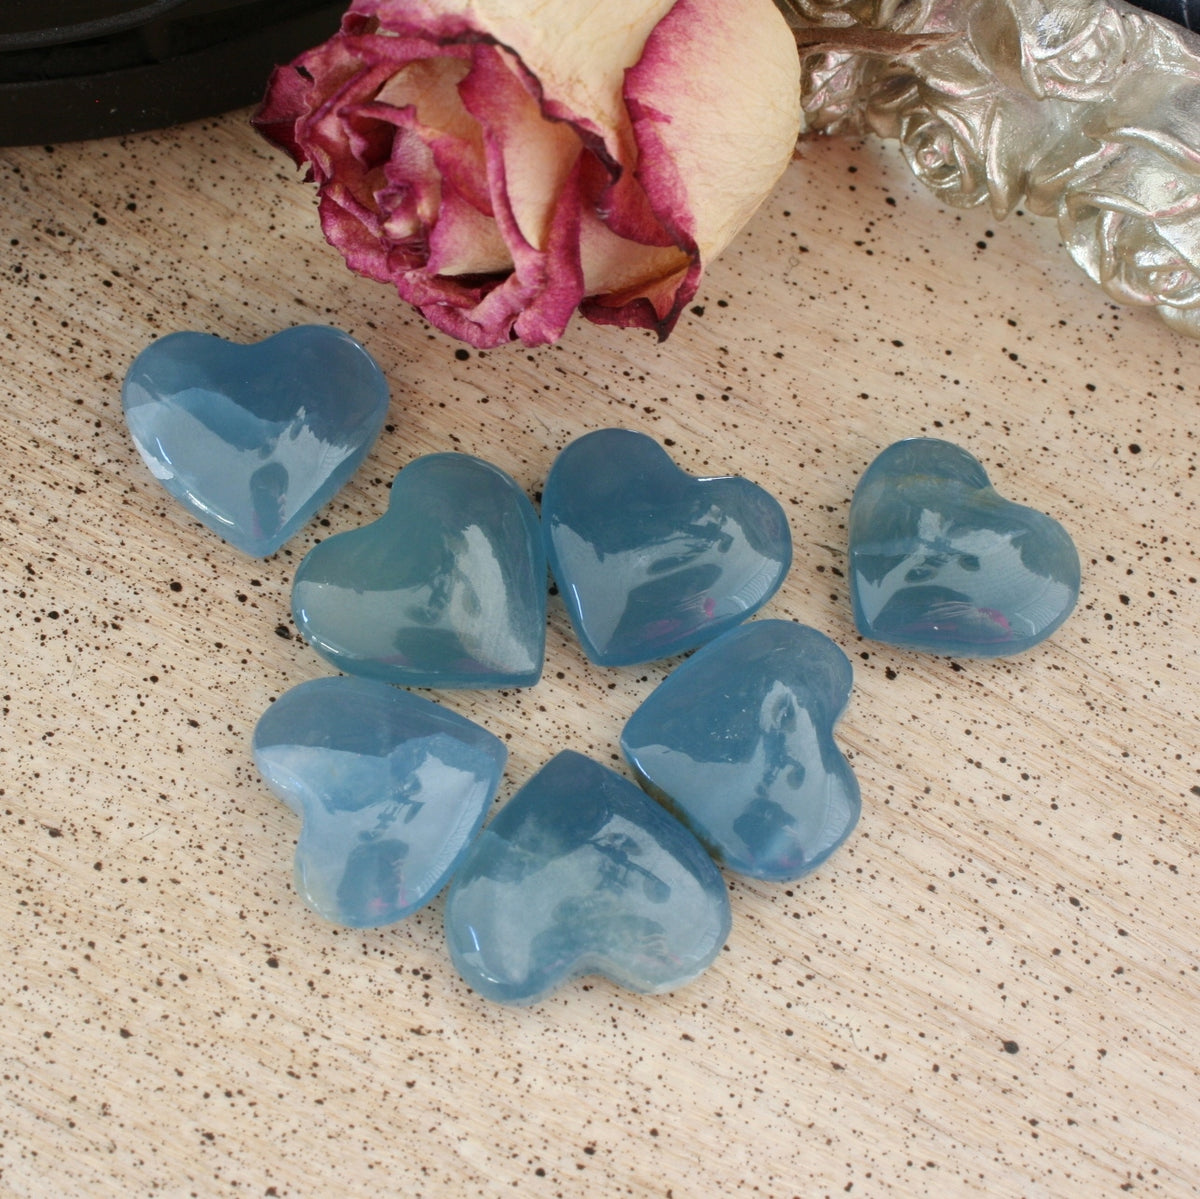 Blue Calcite Heart from Argentina, also called Blue Onyx or Lemurian Aquatine Calcite Grade A